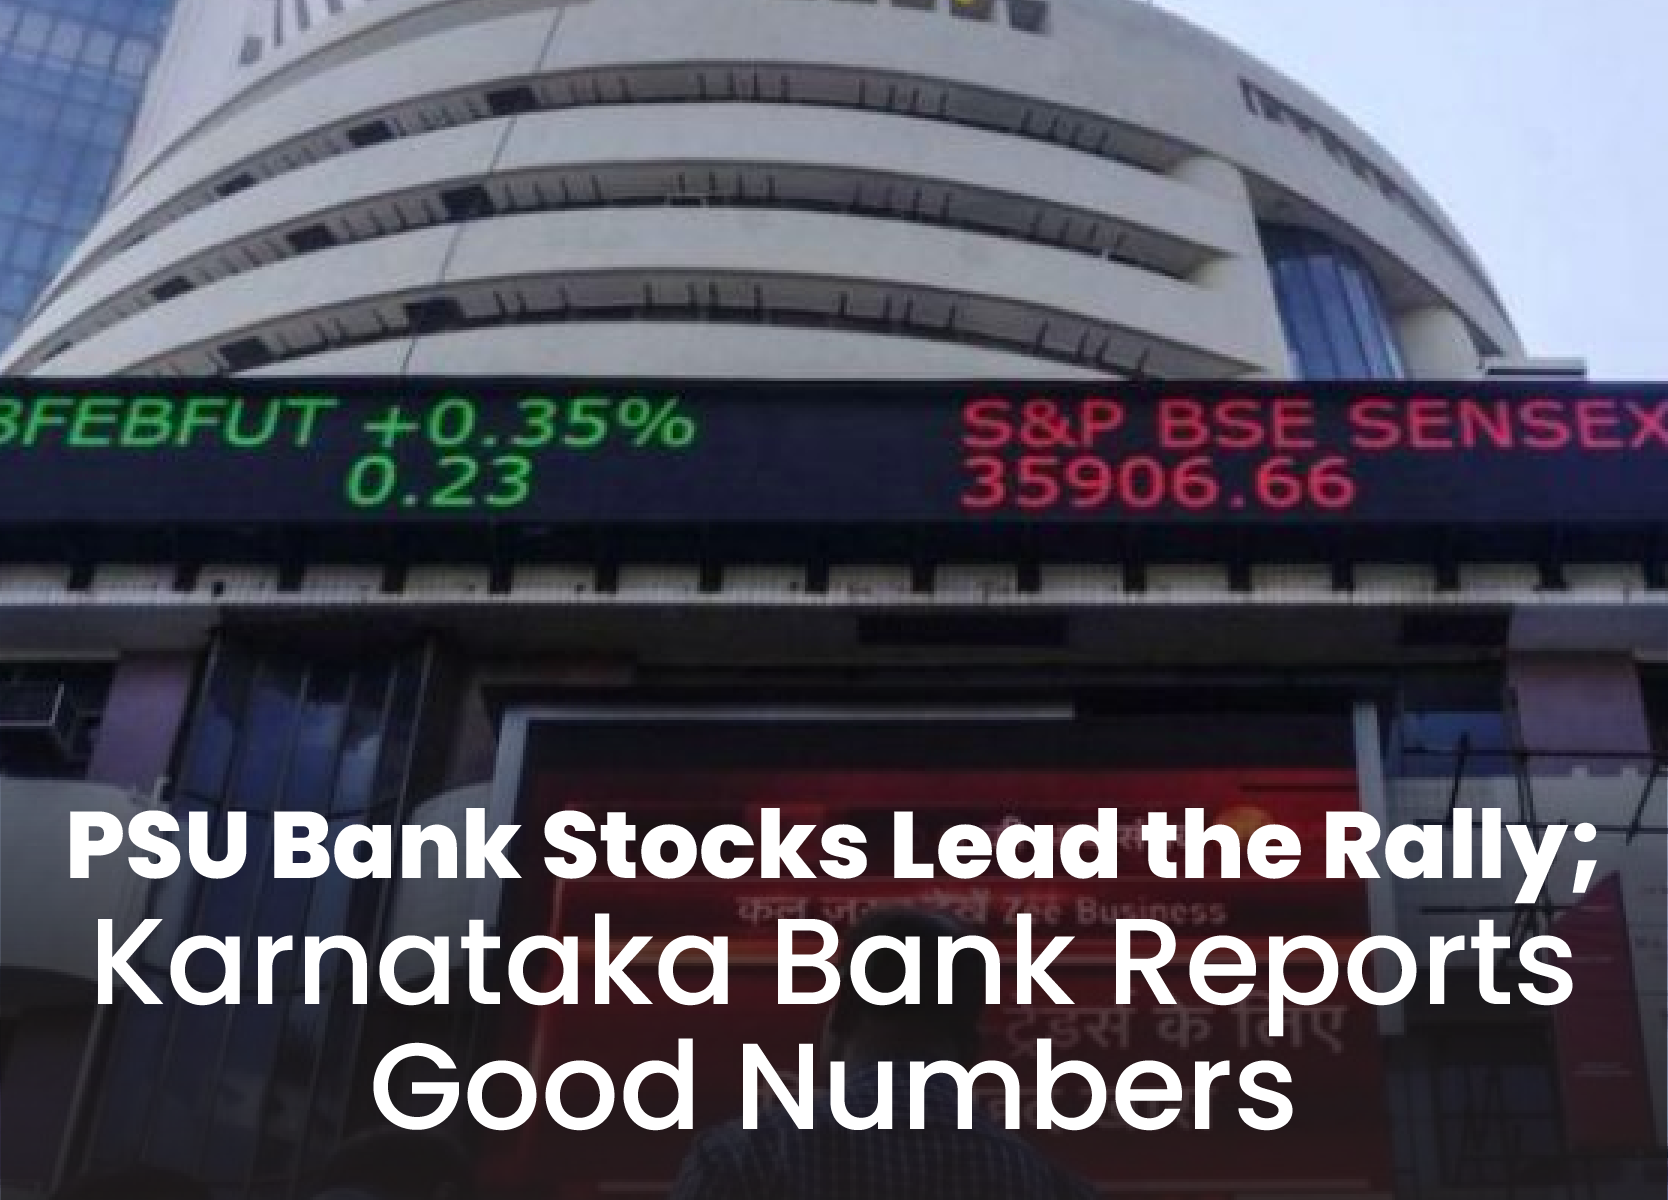 Psu Bank Stocks Lead The Rally Karnataka Bank Reports Good Numbers Marketsmith India Blog 3523